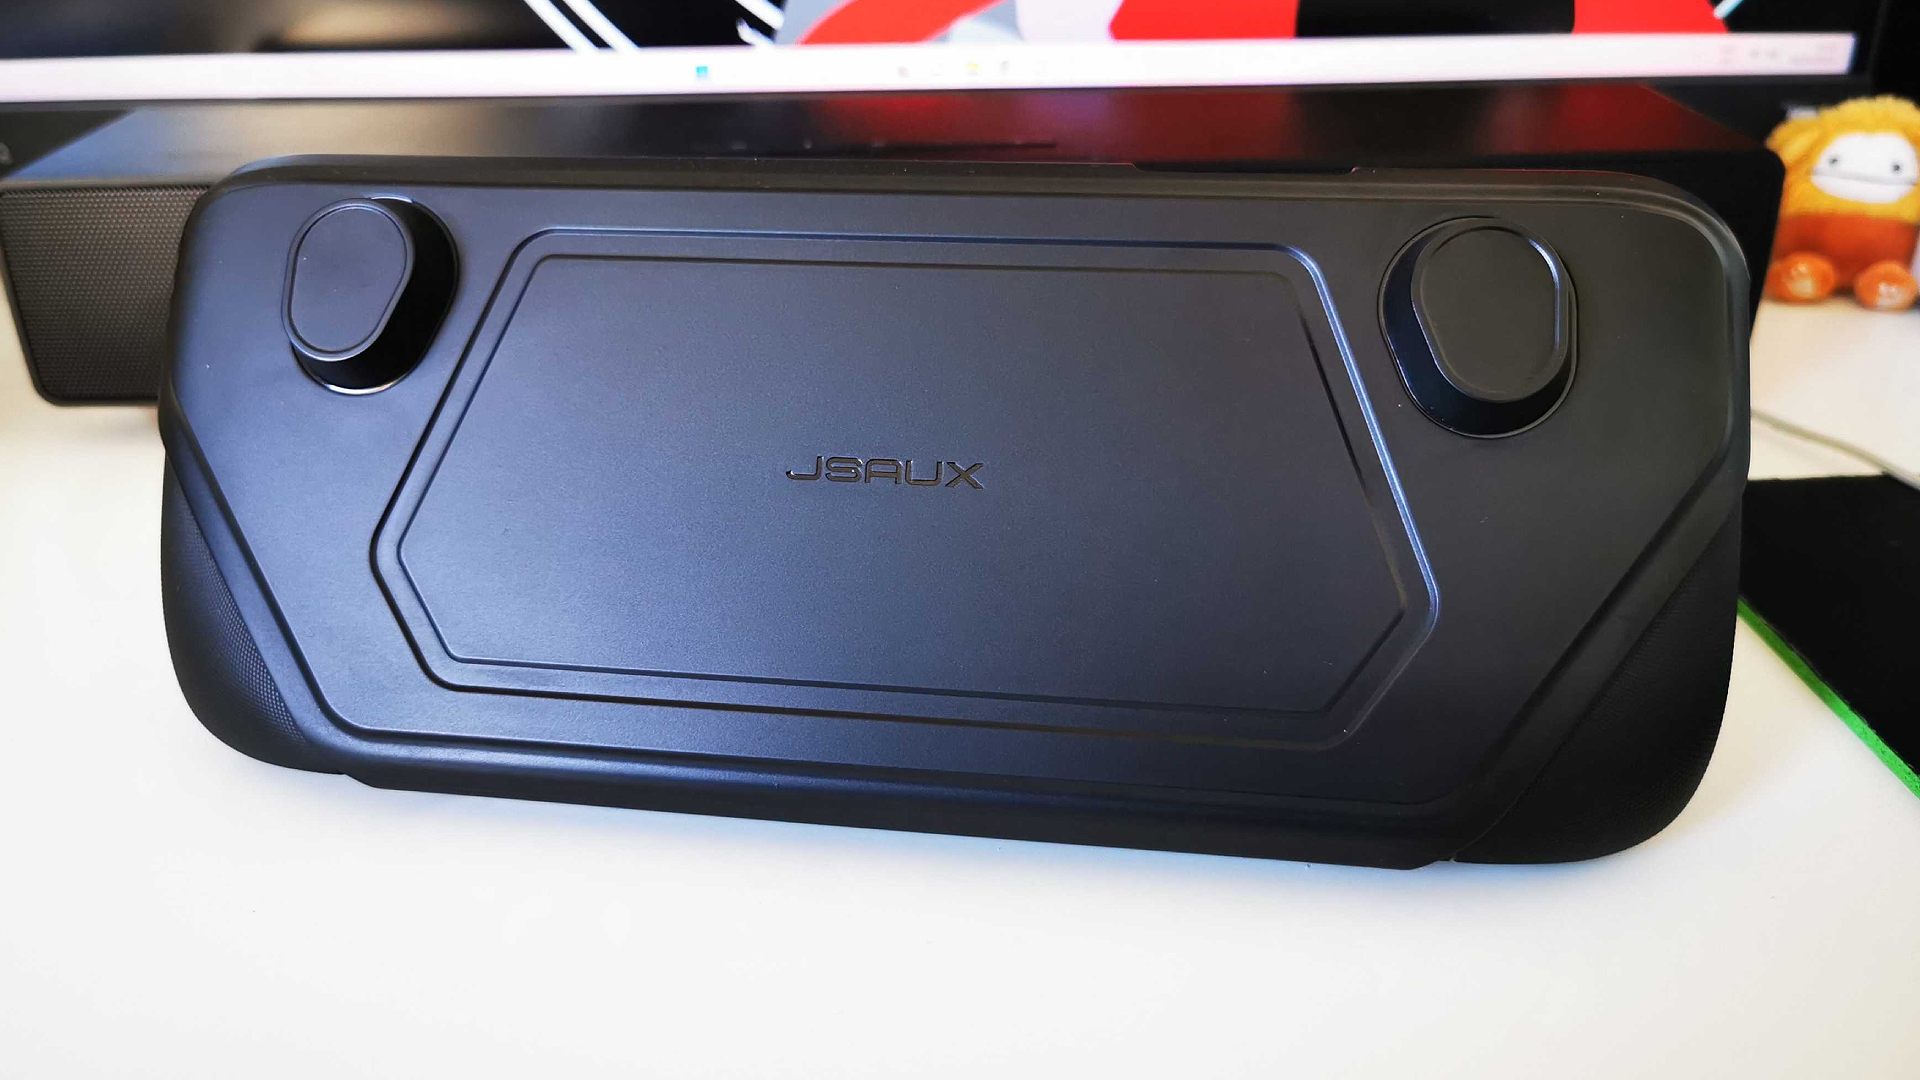 JSAUX introduce new modular Steam Deck case, ModCase